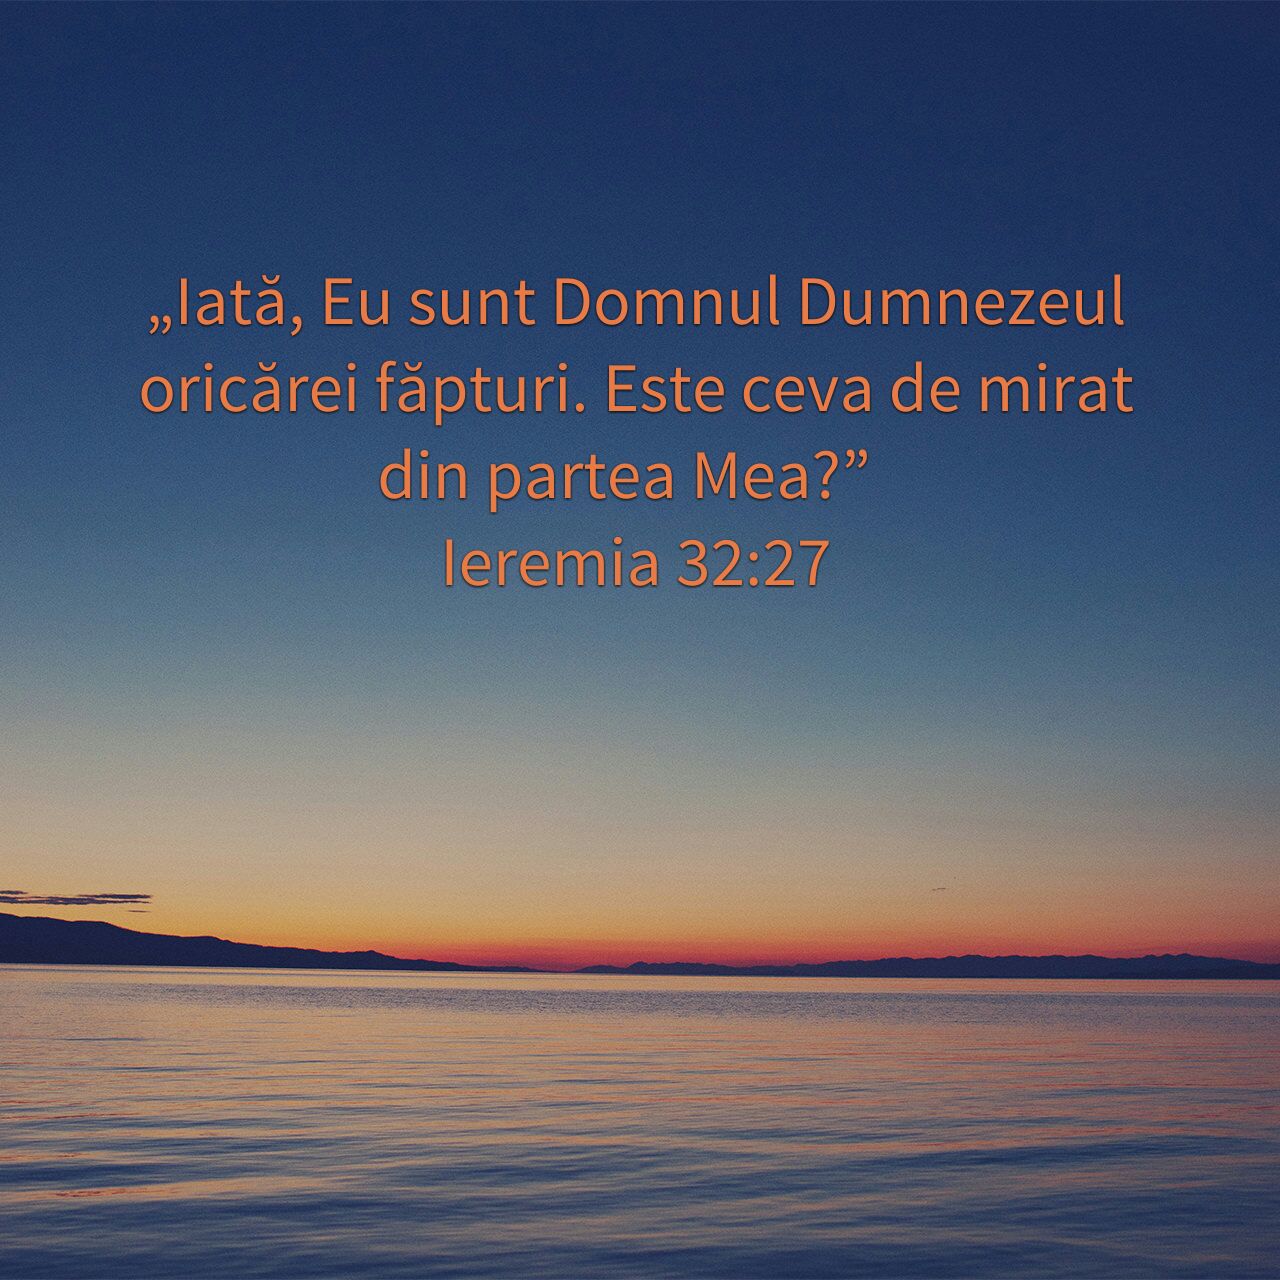 Ieremia 32:27